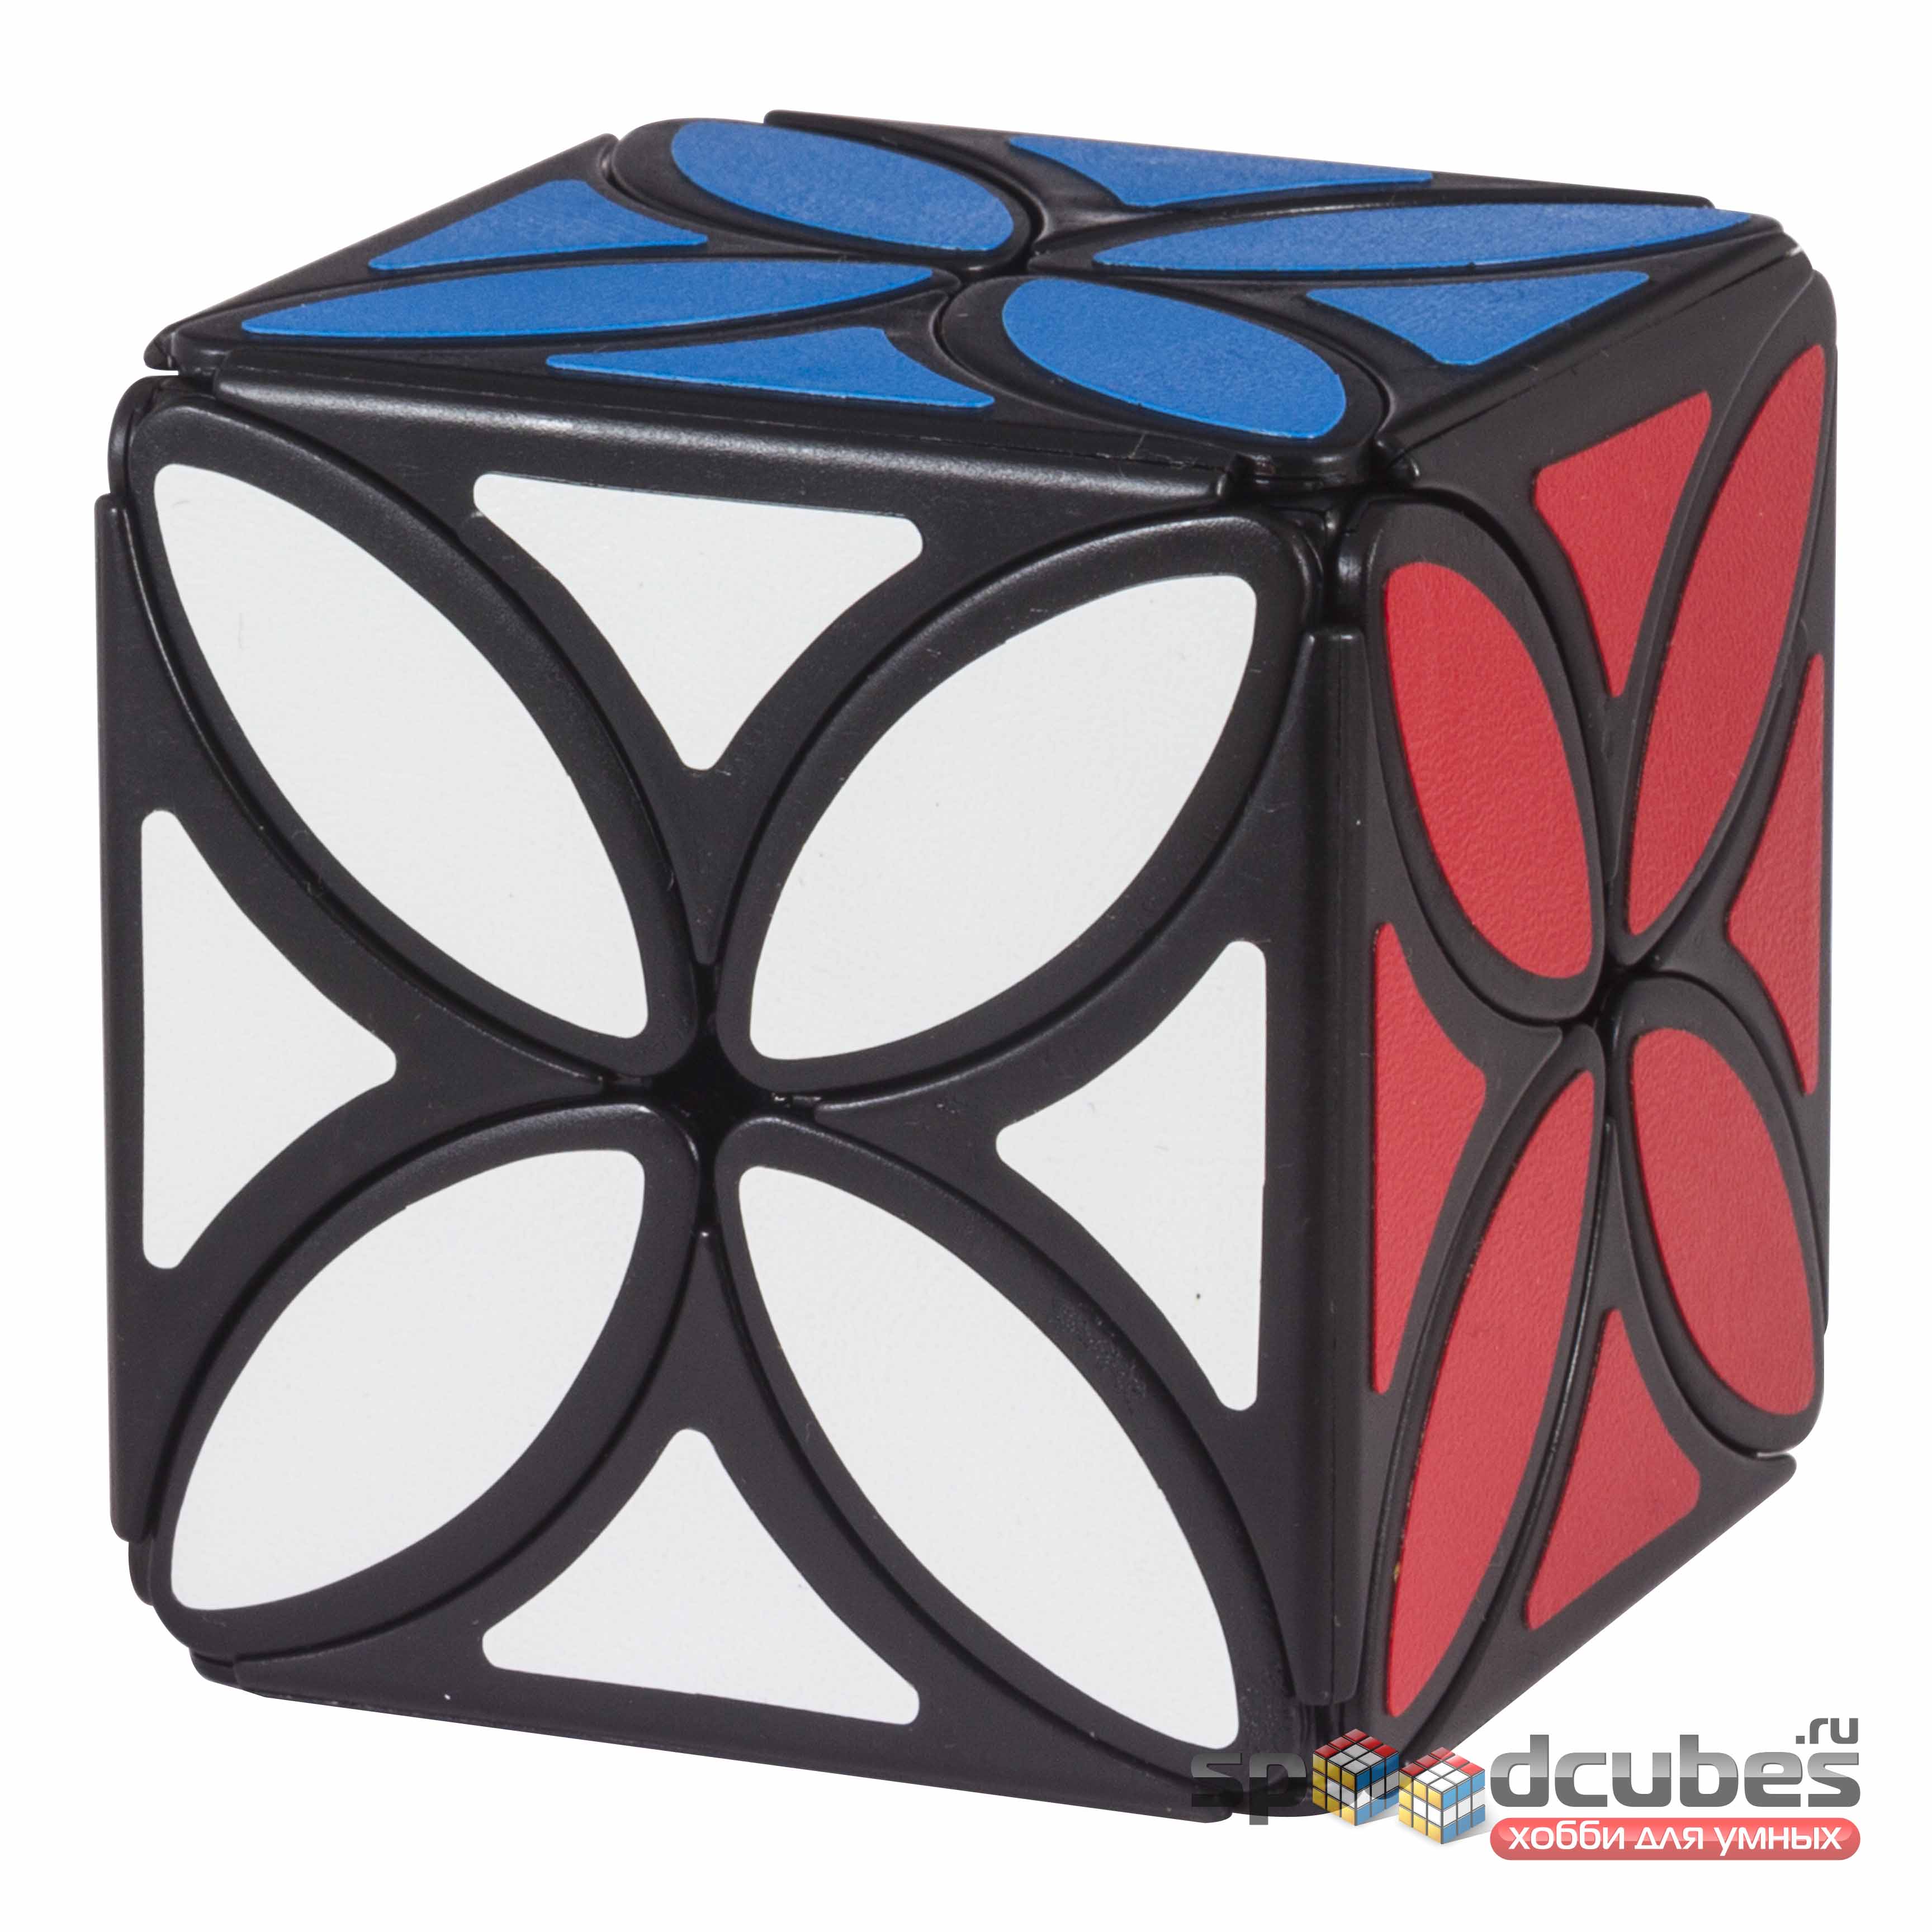 MoZhi Clover Cube